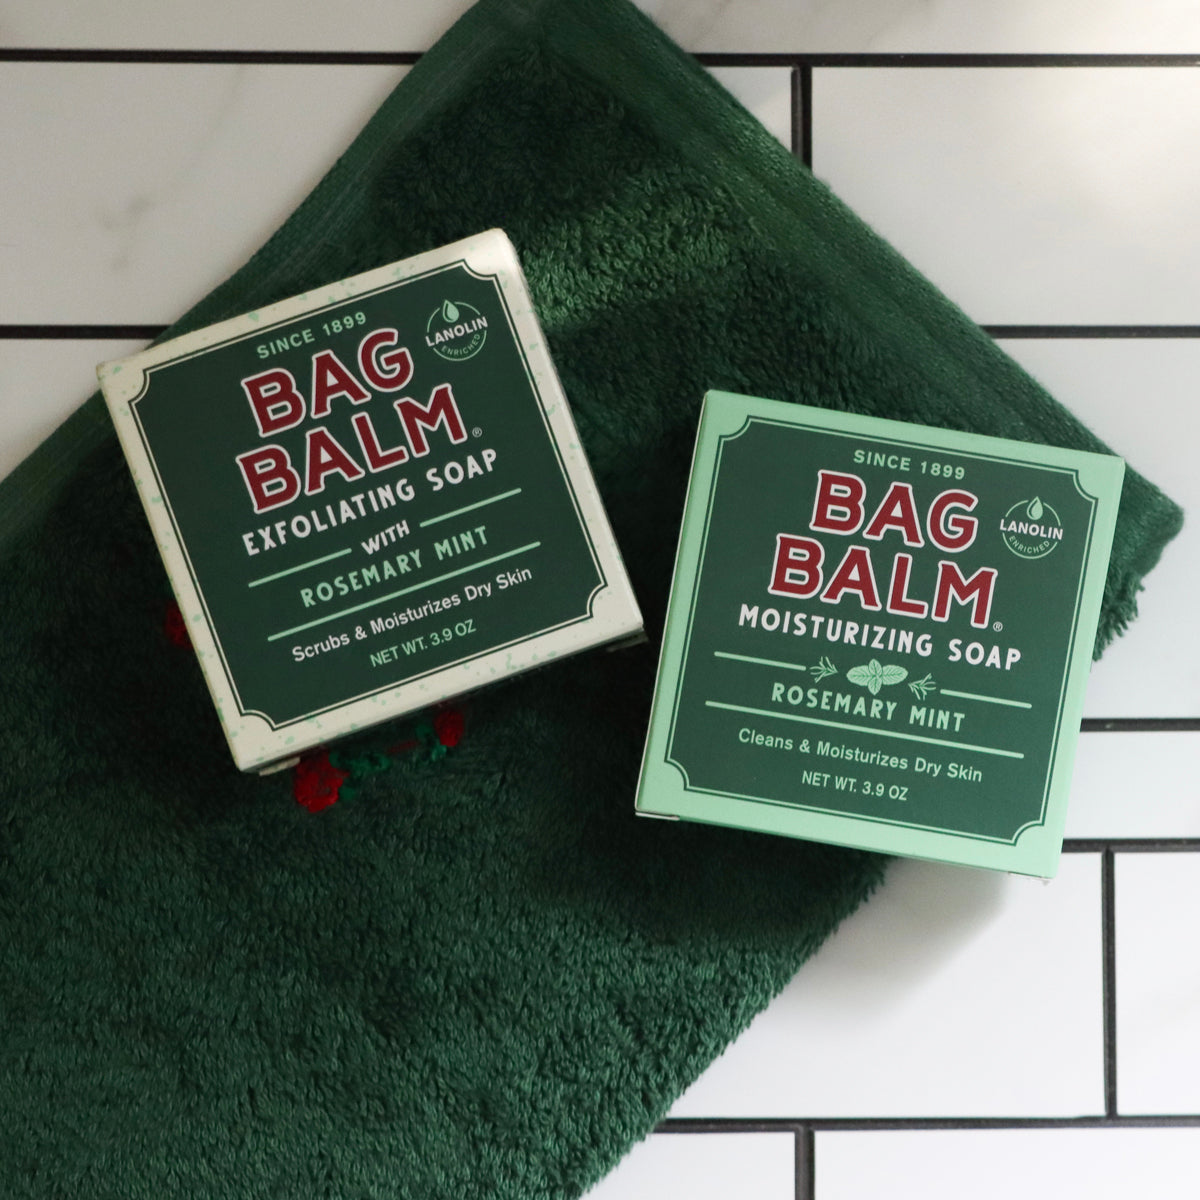 Bag Balm Moisturizing Soap and Bag Balm Exfoliating Soap